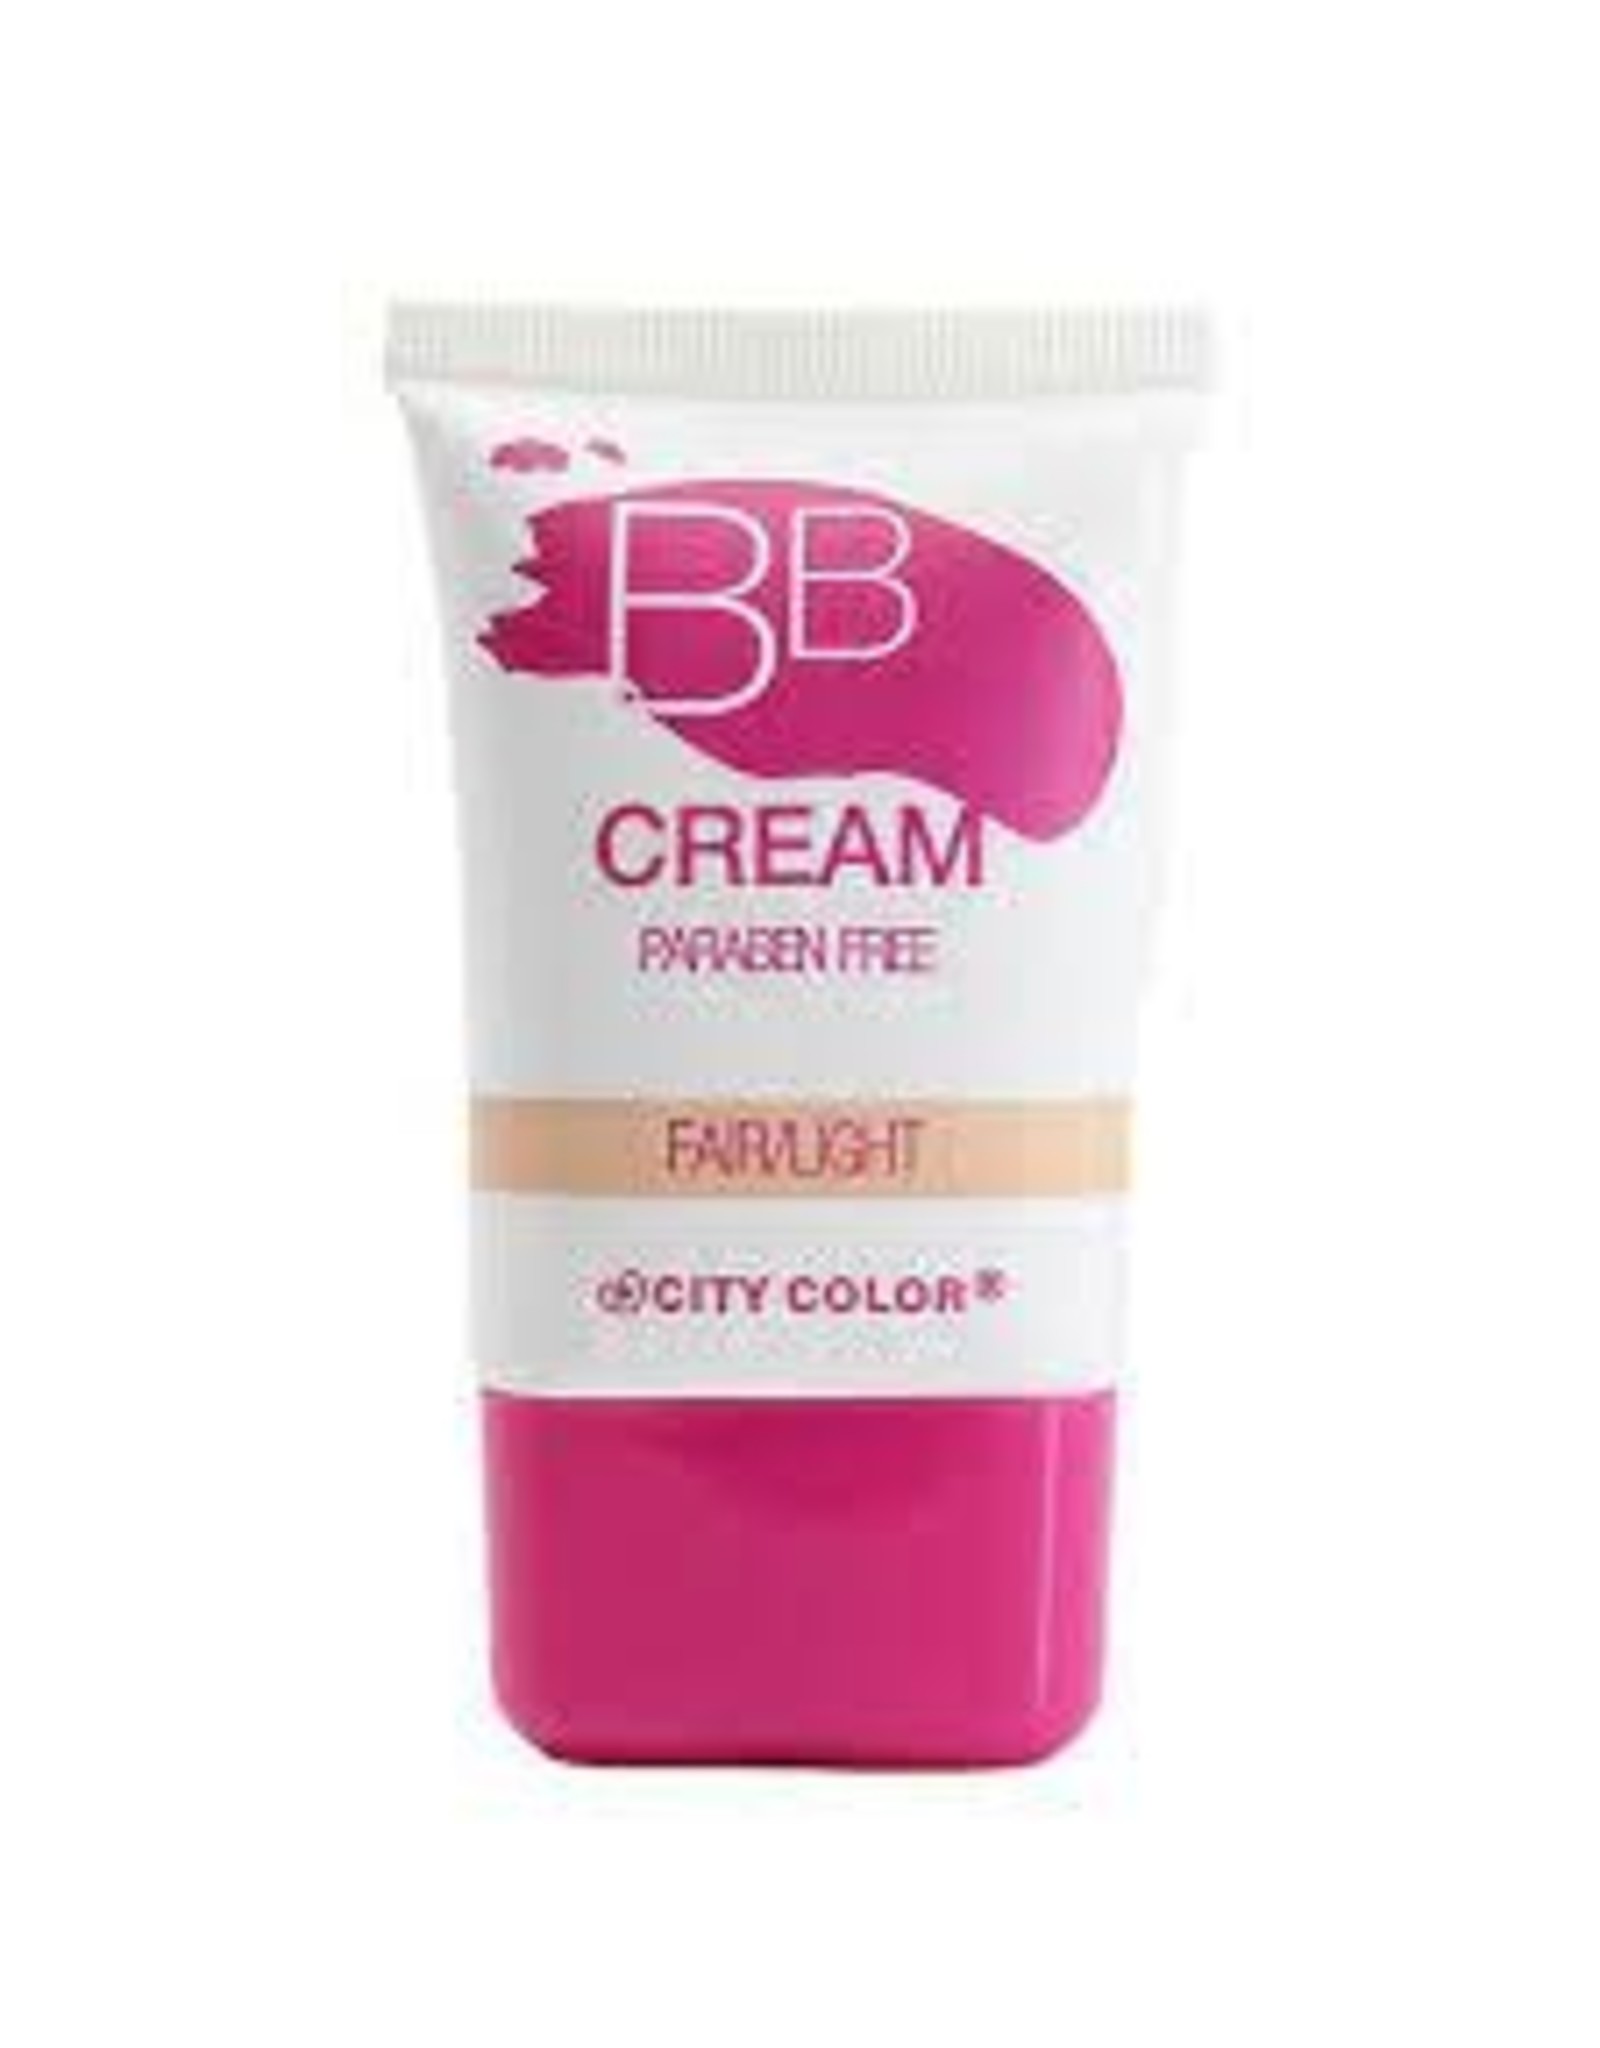 City Color BB Cream by City Color